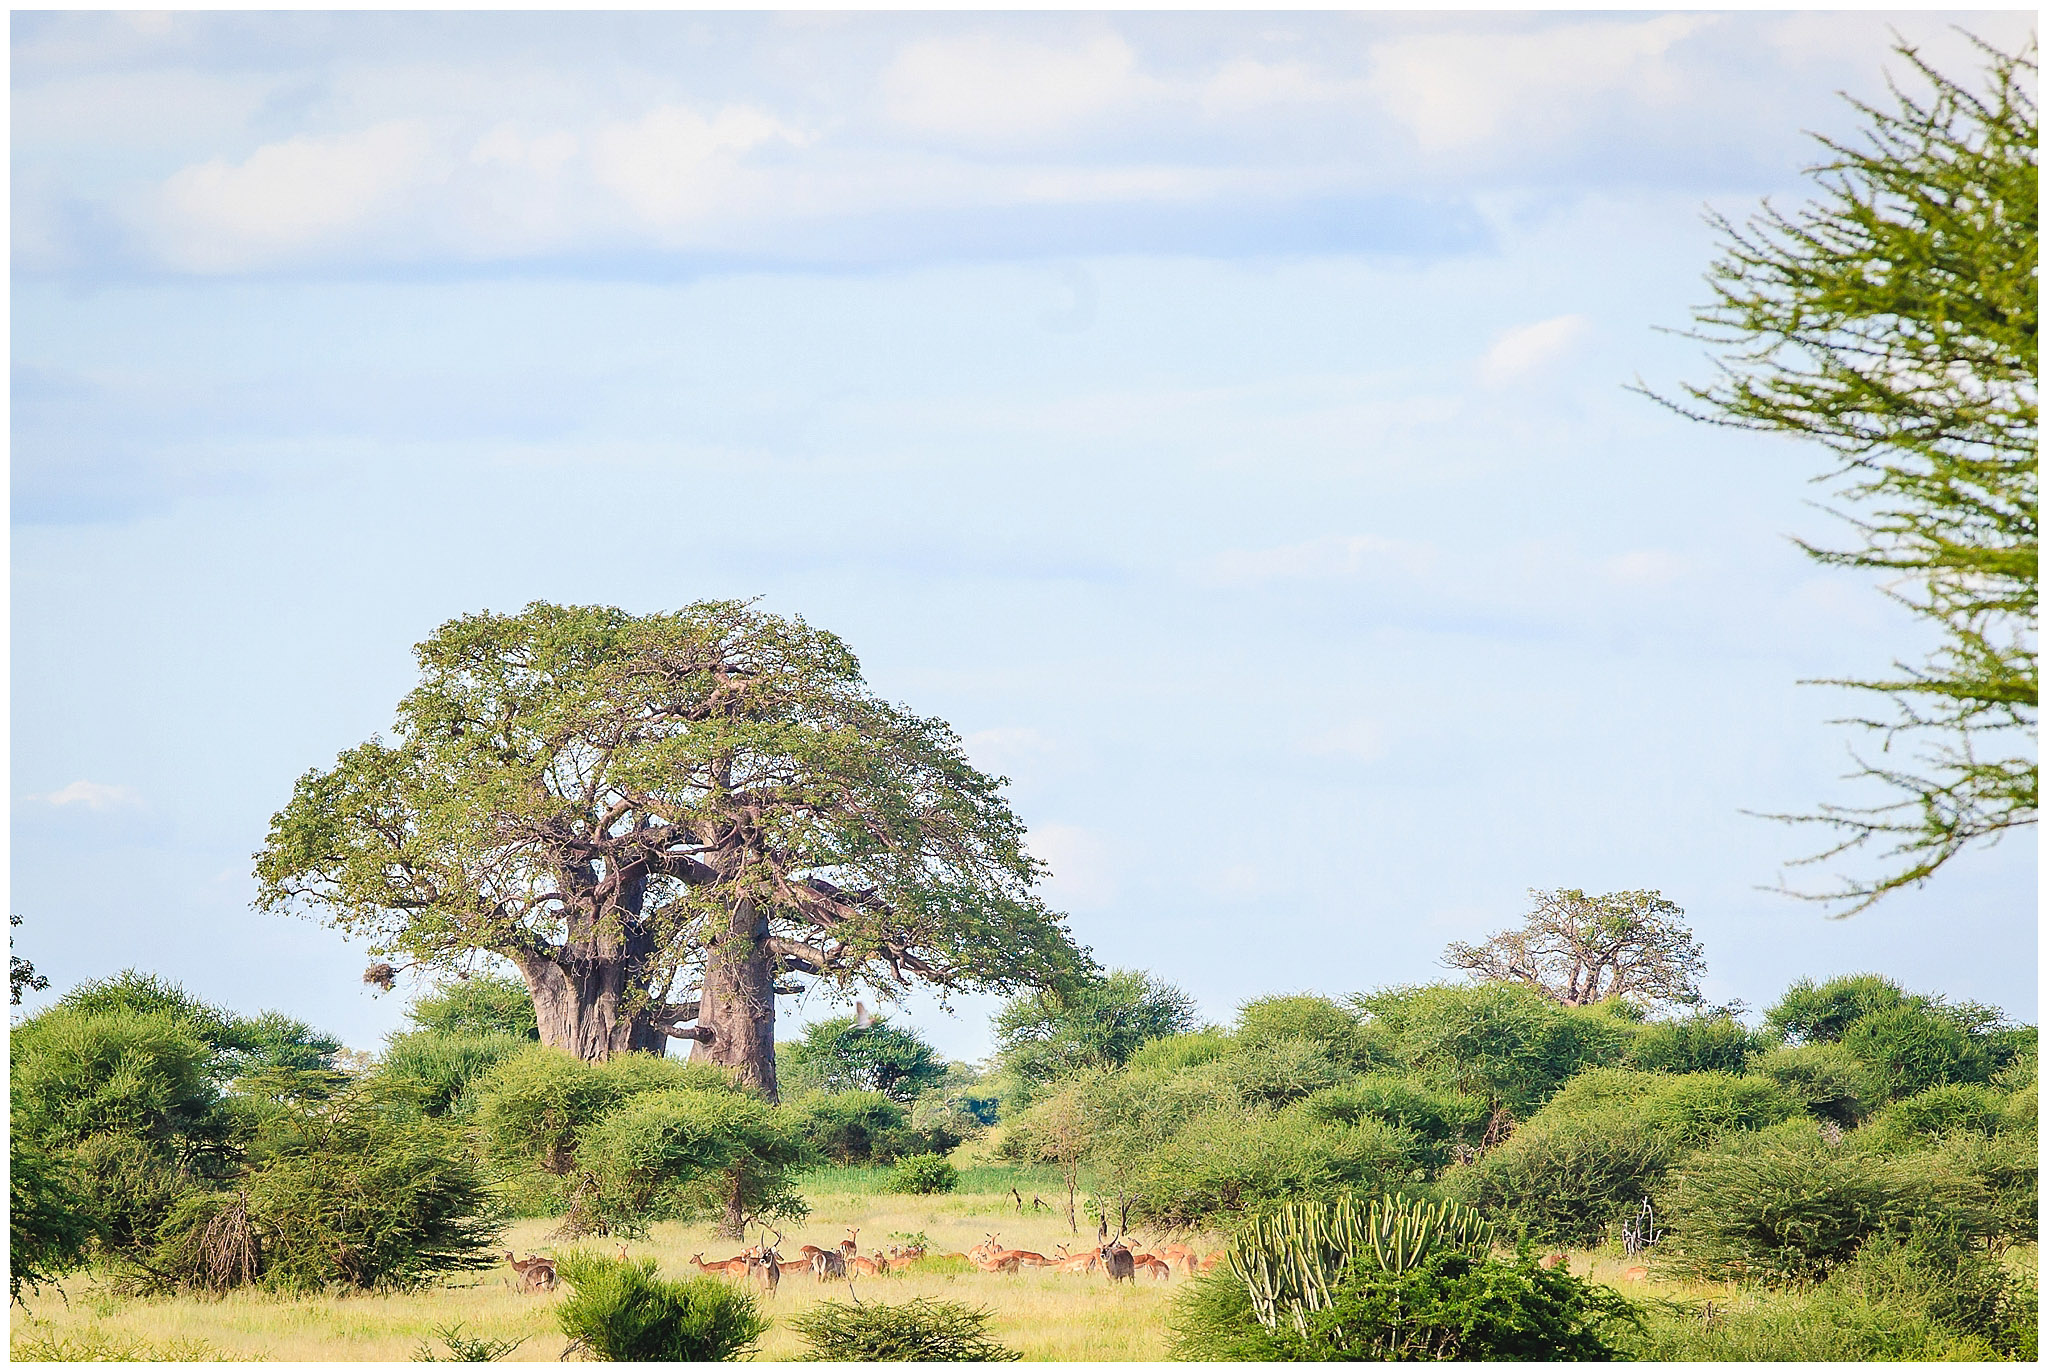 Wildlife under baobab tree in Tarangire National Park, Tanzania, Africa